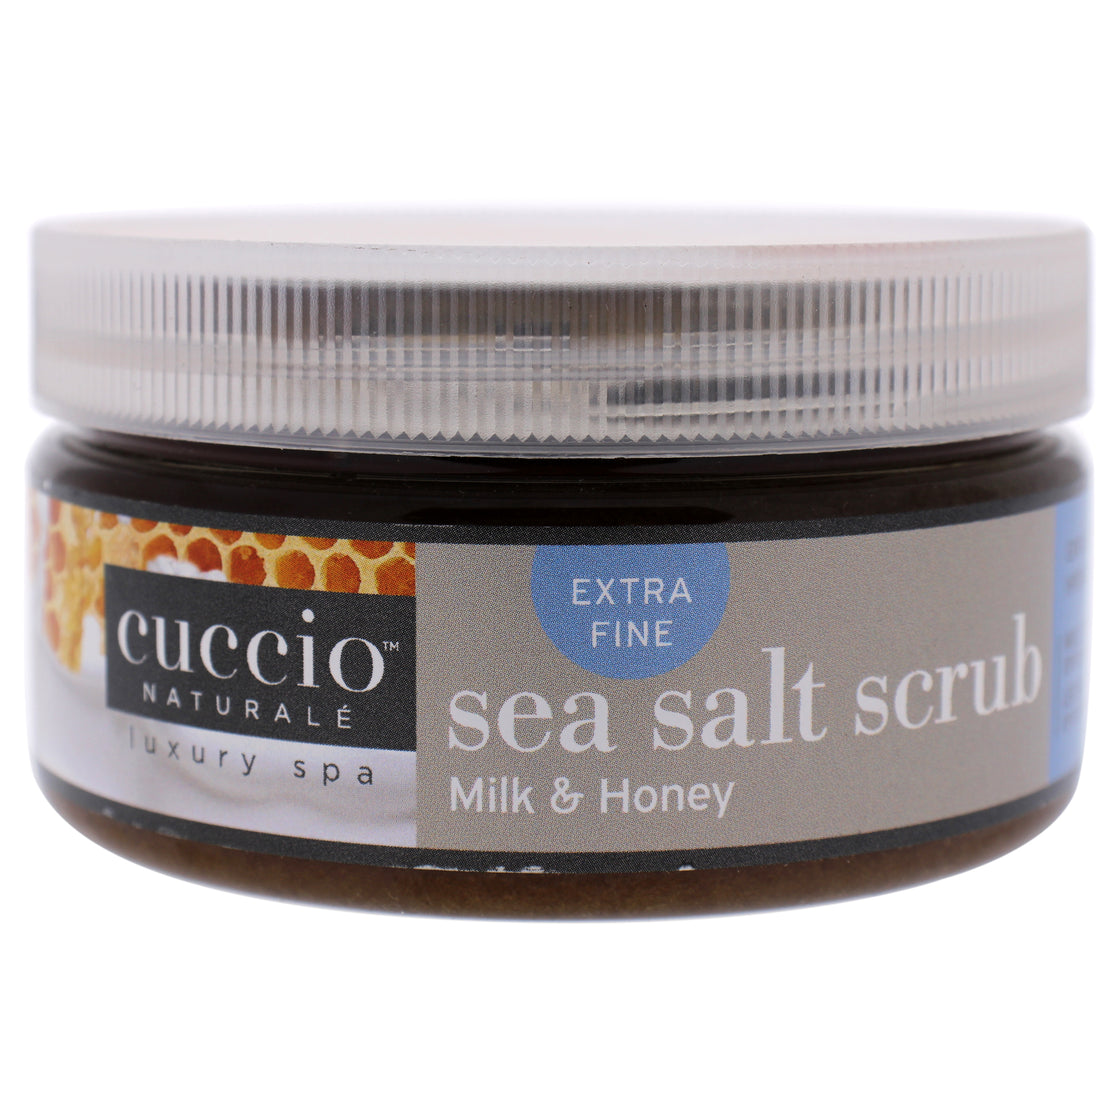 Sea Salt Scrub - Milk and Honey by Cuccio Naturale for Women - 8 oz Scrub